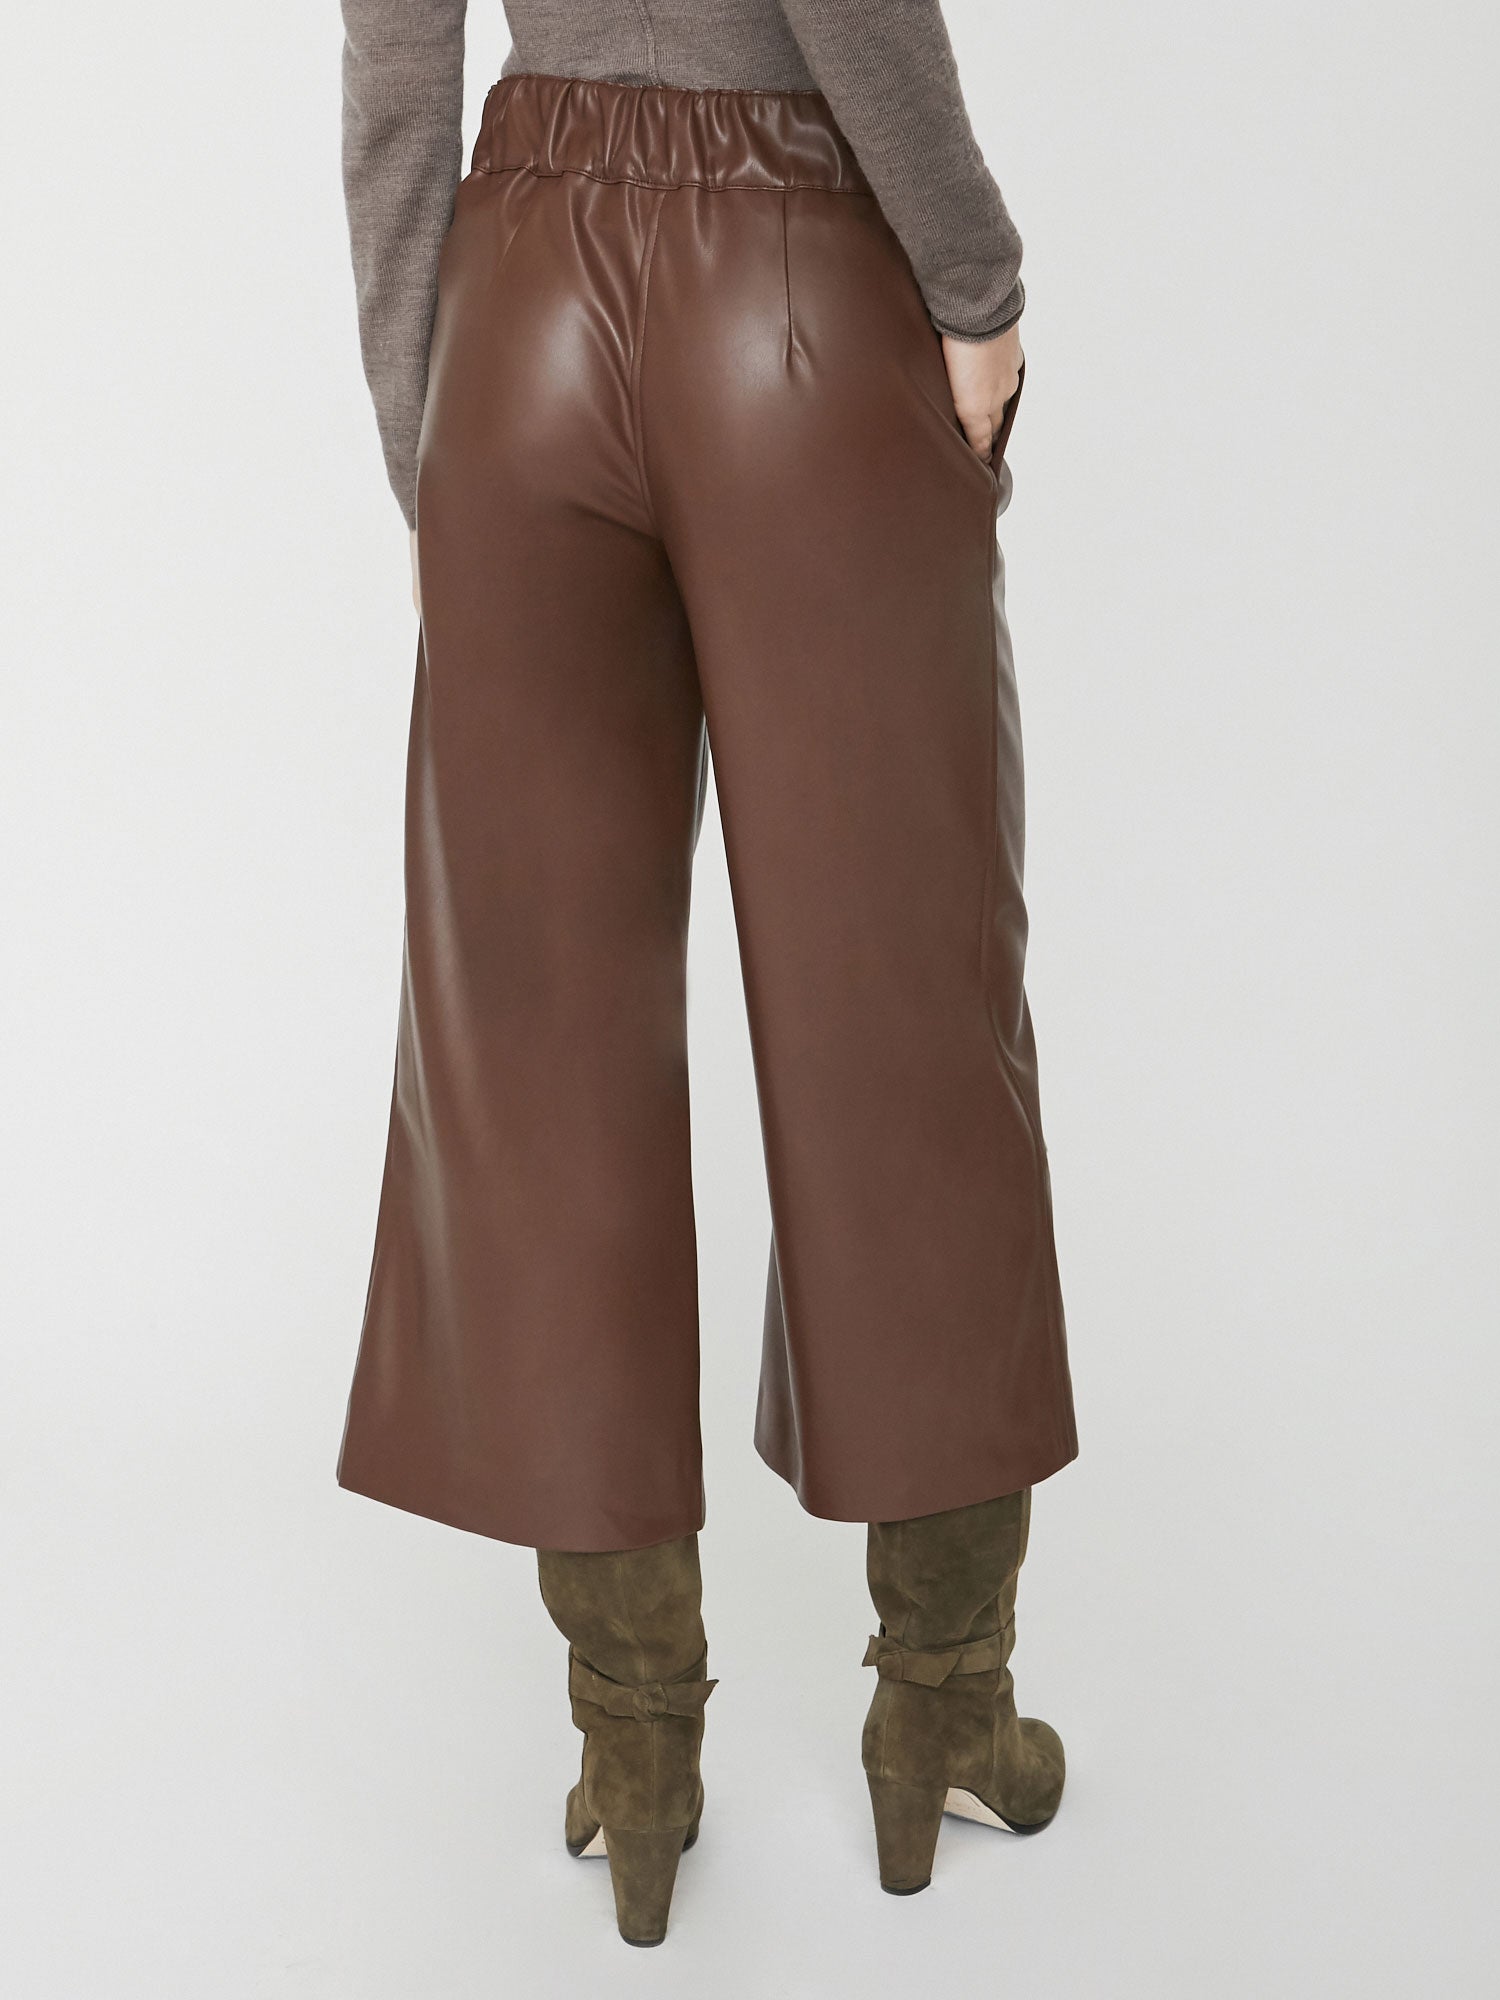 Vegan Leather Cropped Pants, Brown, Wide Leg, Women's